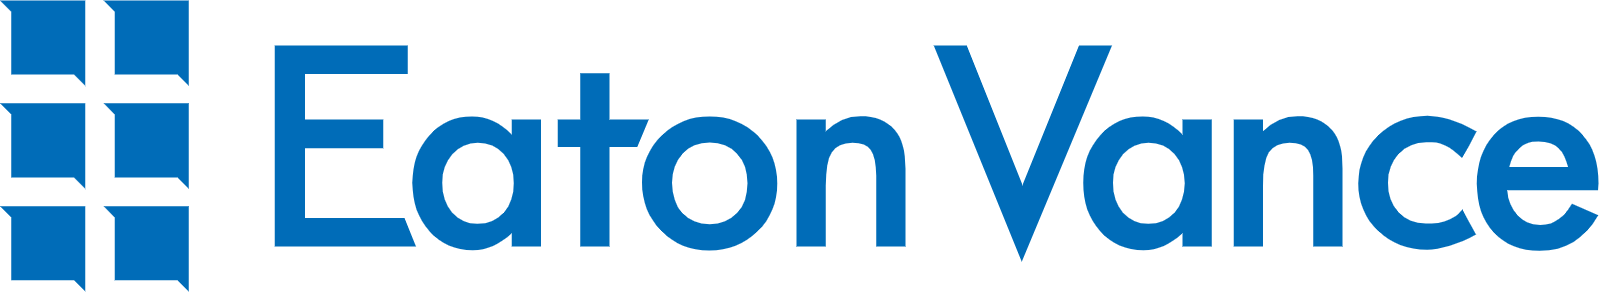 Eaton Vance logo large (transparent PNG)